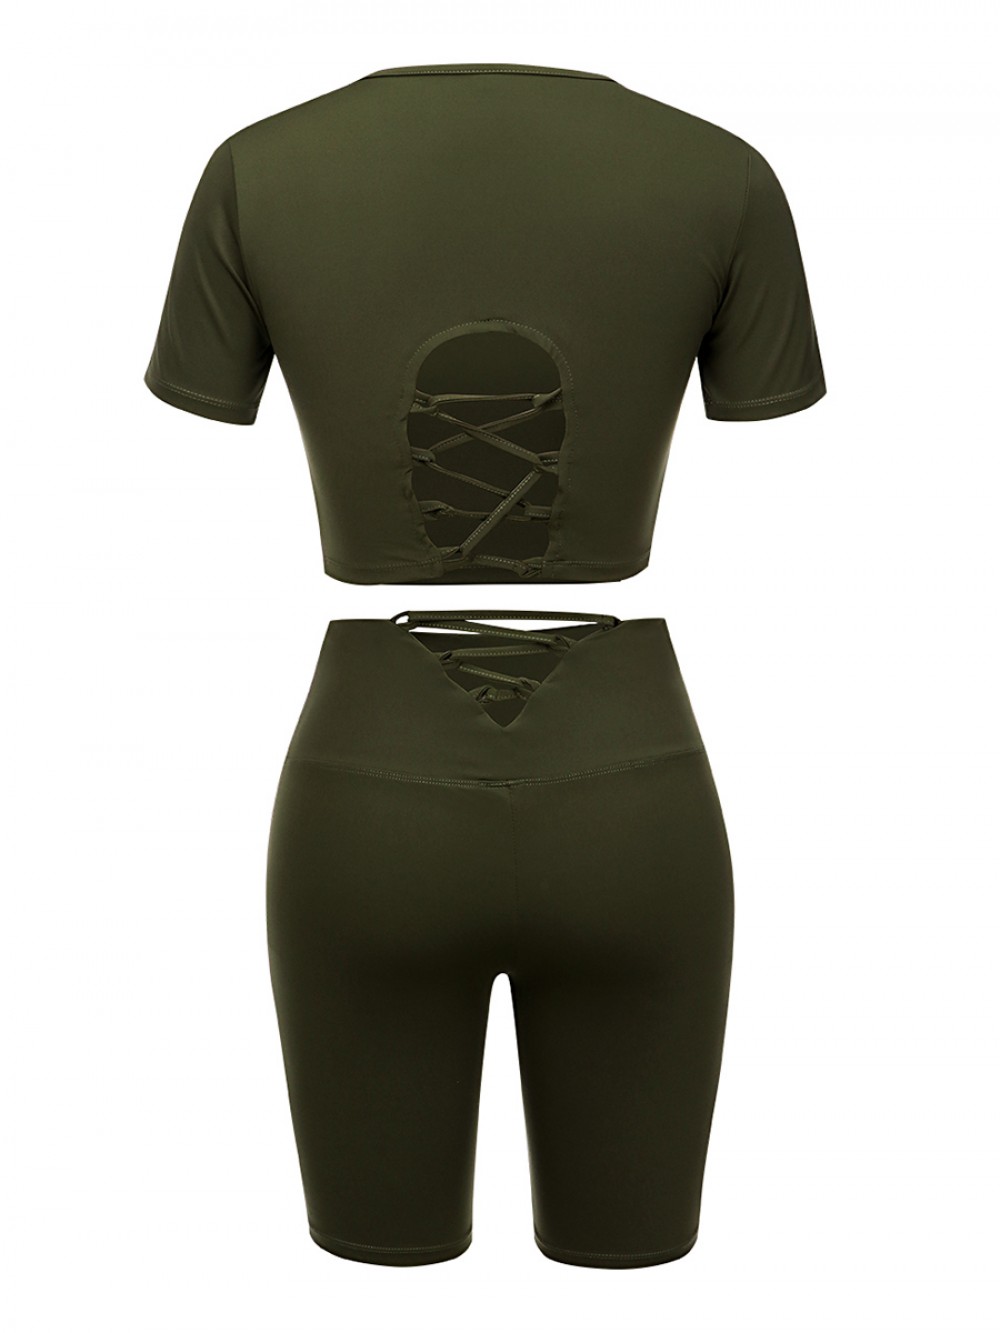 Outdoor Dark Green Short Sleeve Top Thigh Length Shorts Stylish Design